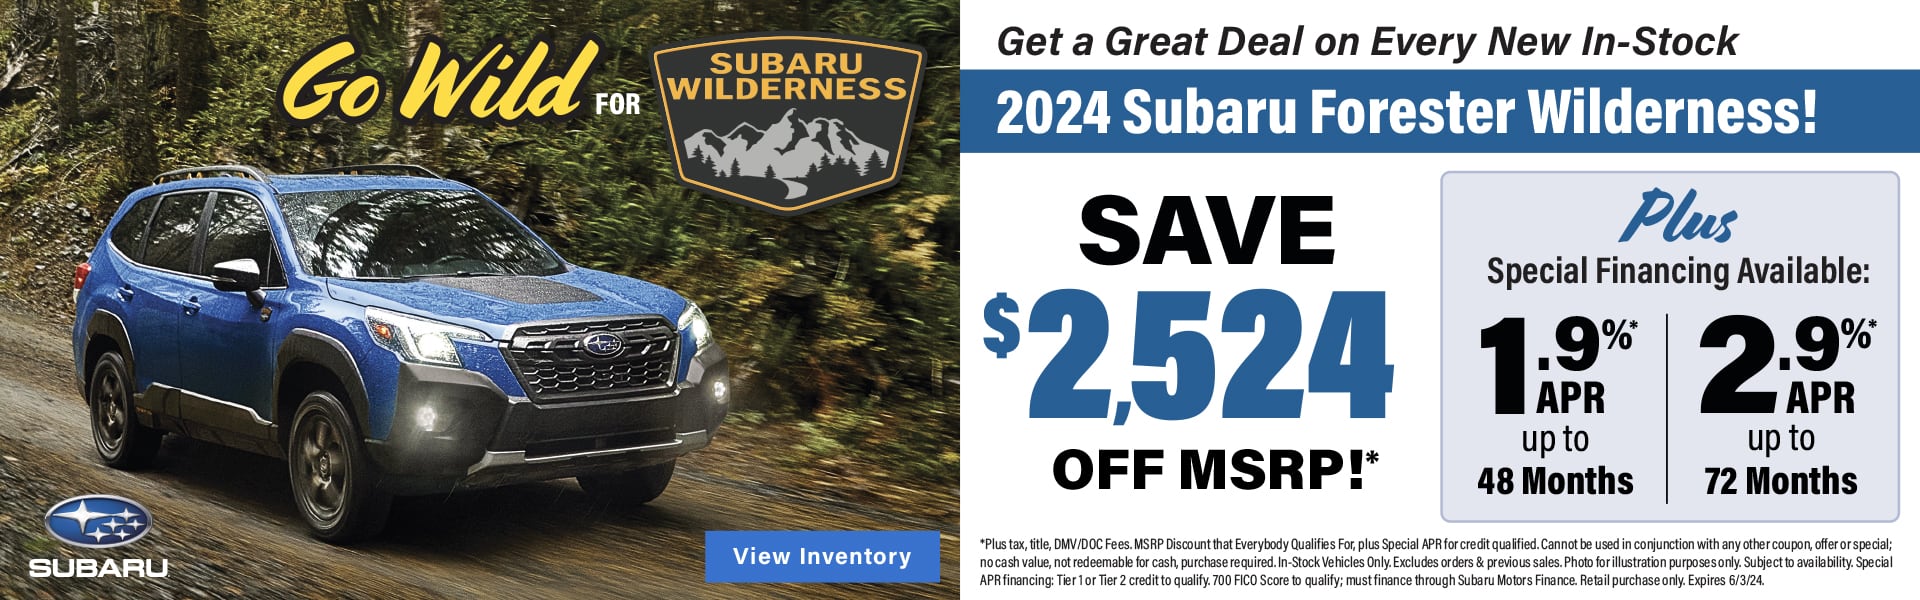 Go Wild For Subaru Forester Wilderness